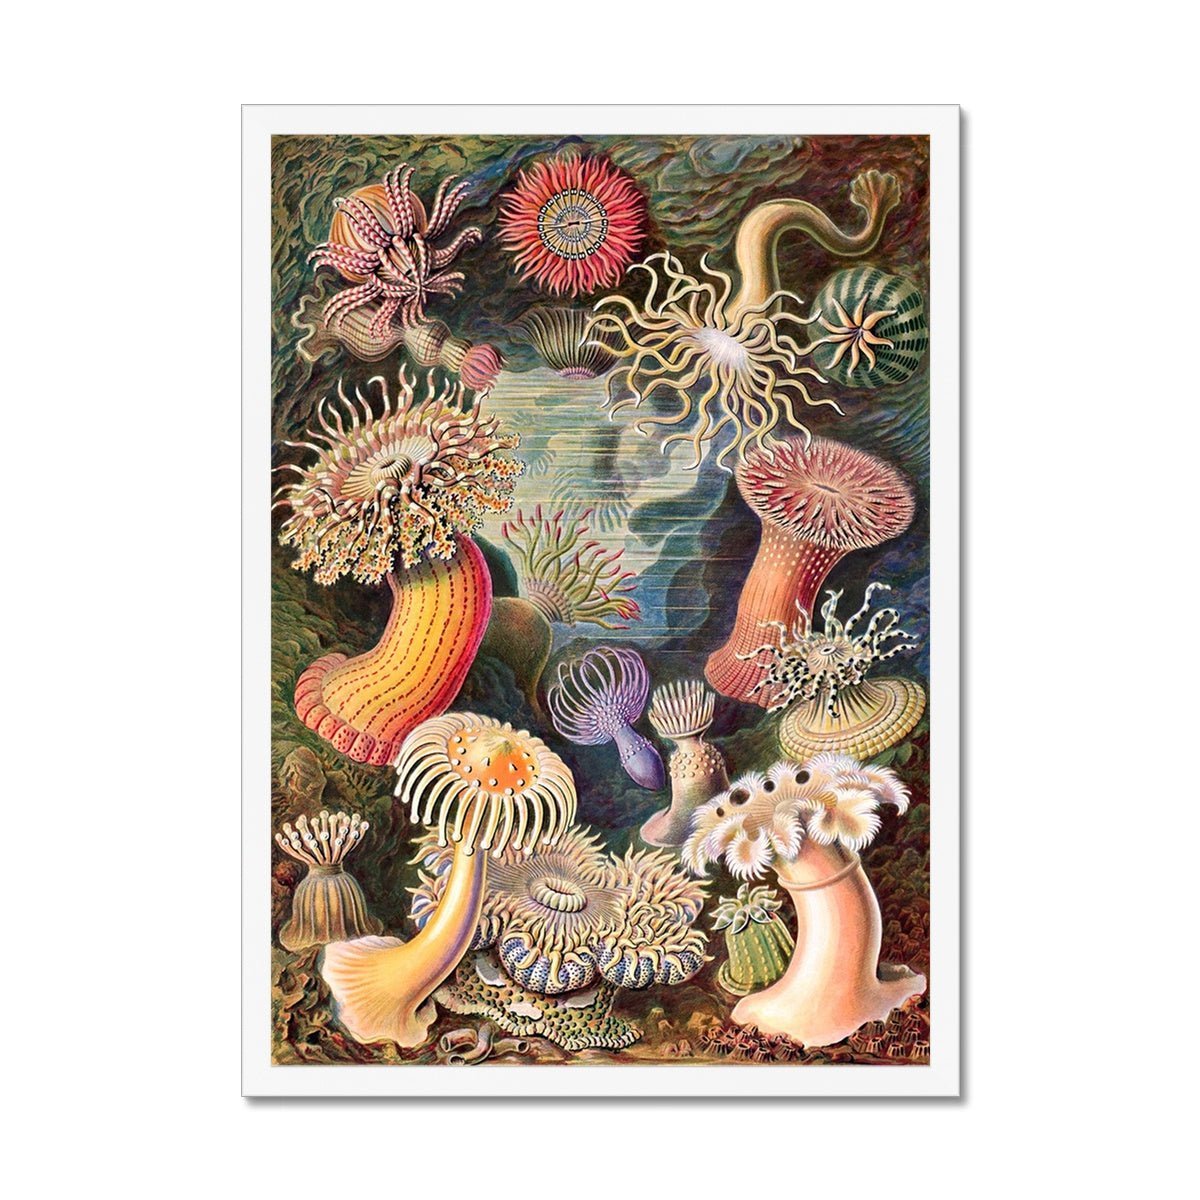 Framed Print 6"x8" / White Frame Framed Ernst Haeckel Actiniae Sea Anemones Marine Life | Sea Life, Ocean Home Decor | Natural History Vintage Evolution Framed Art Print